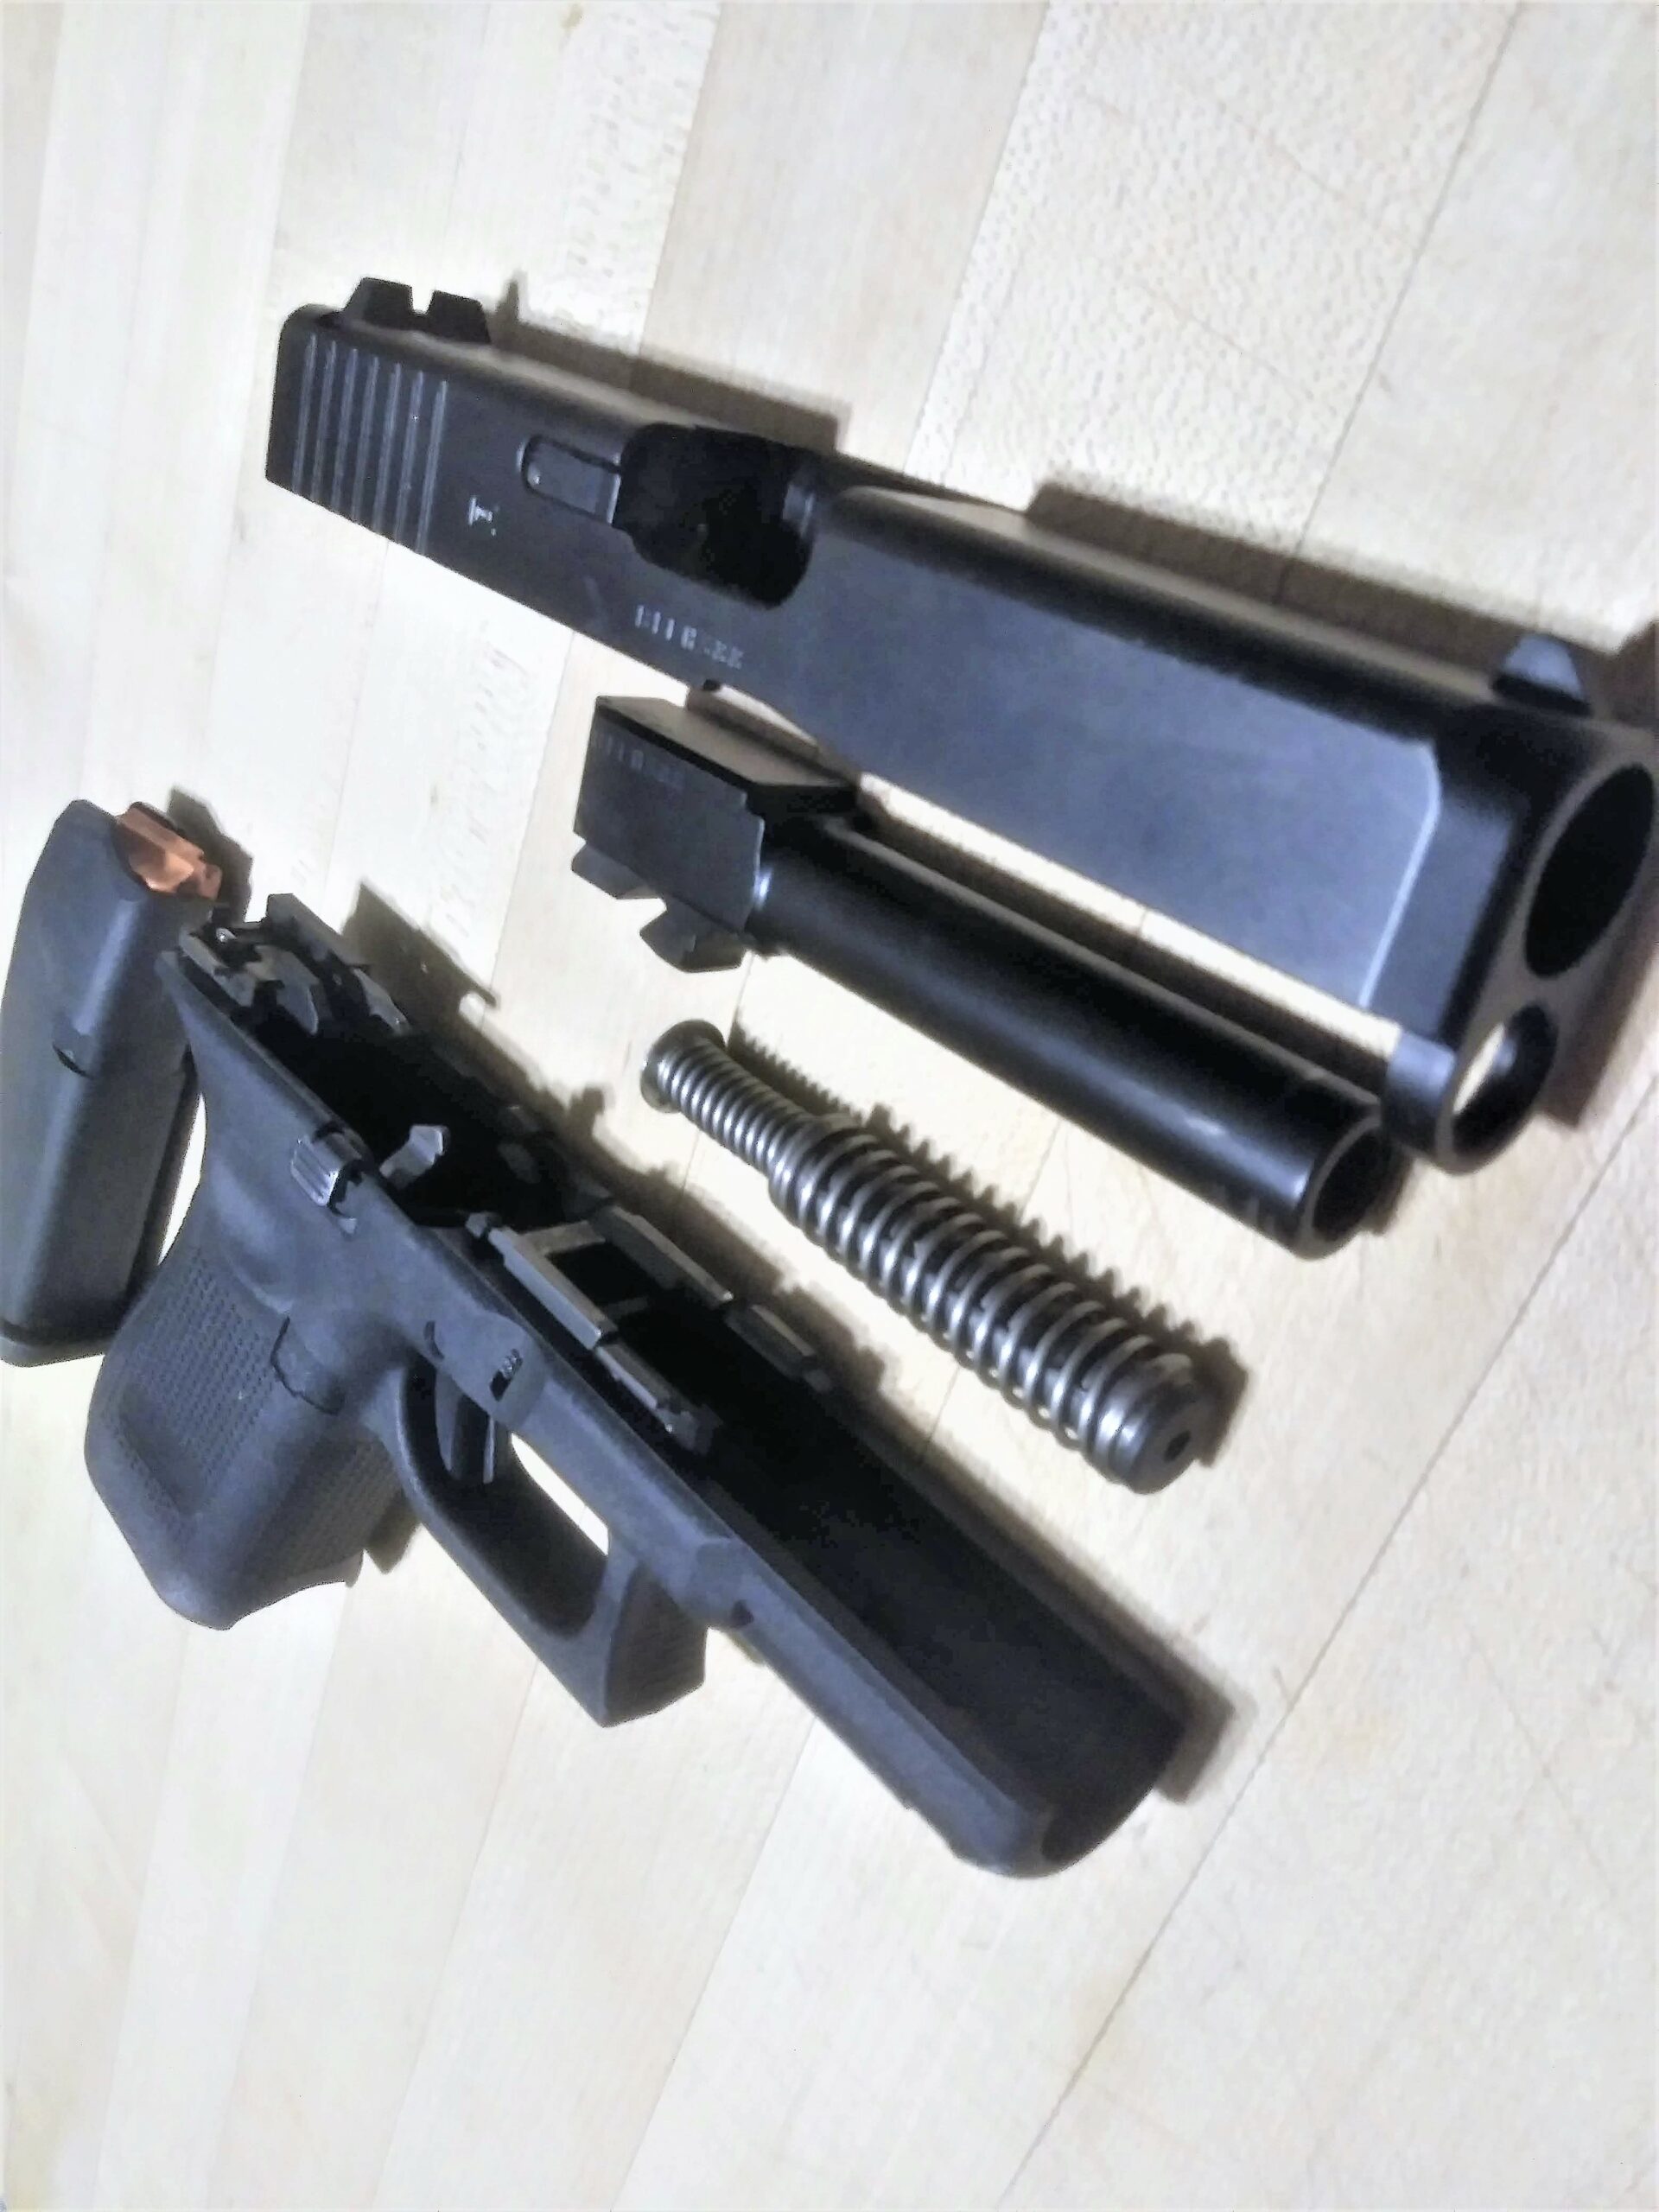 Parts of a handgun